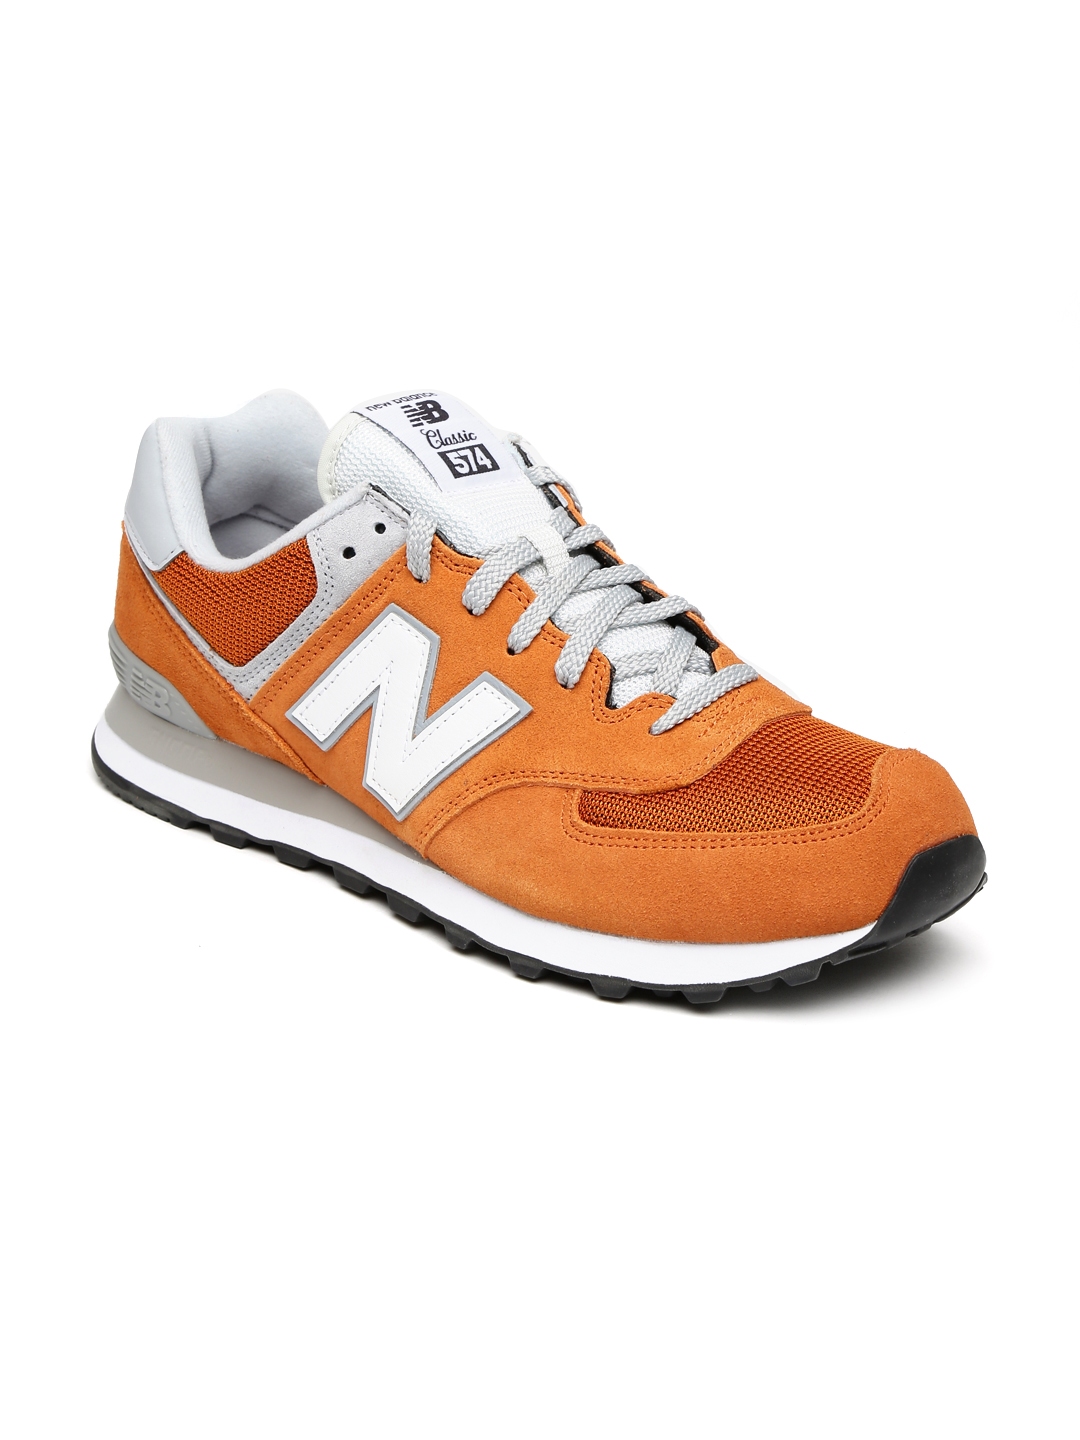 Buy New Balance Men Orange Suede Sneakers - Casual Shoes for Men 1645447 | Myntra